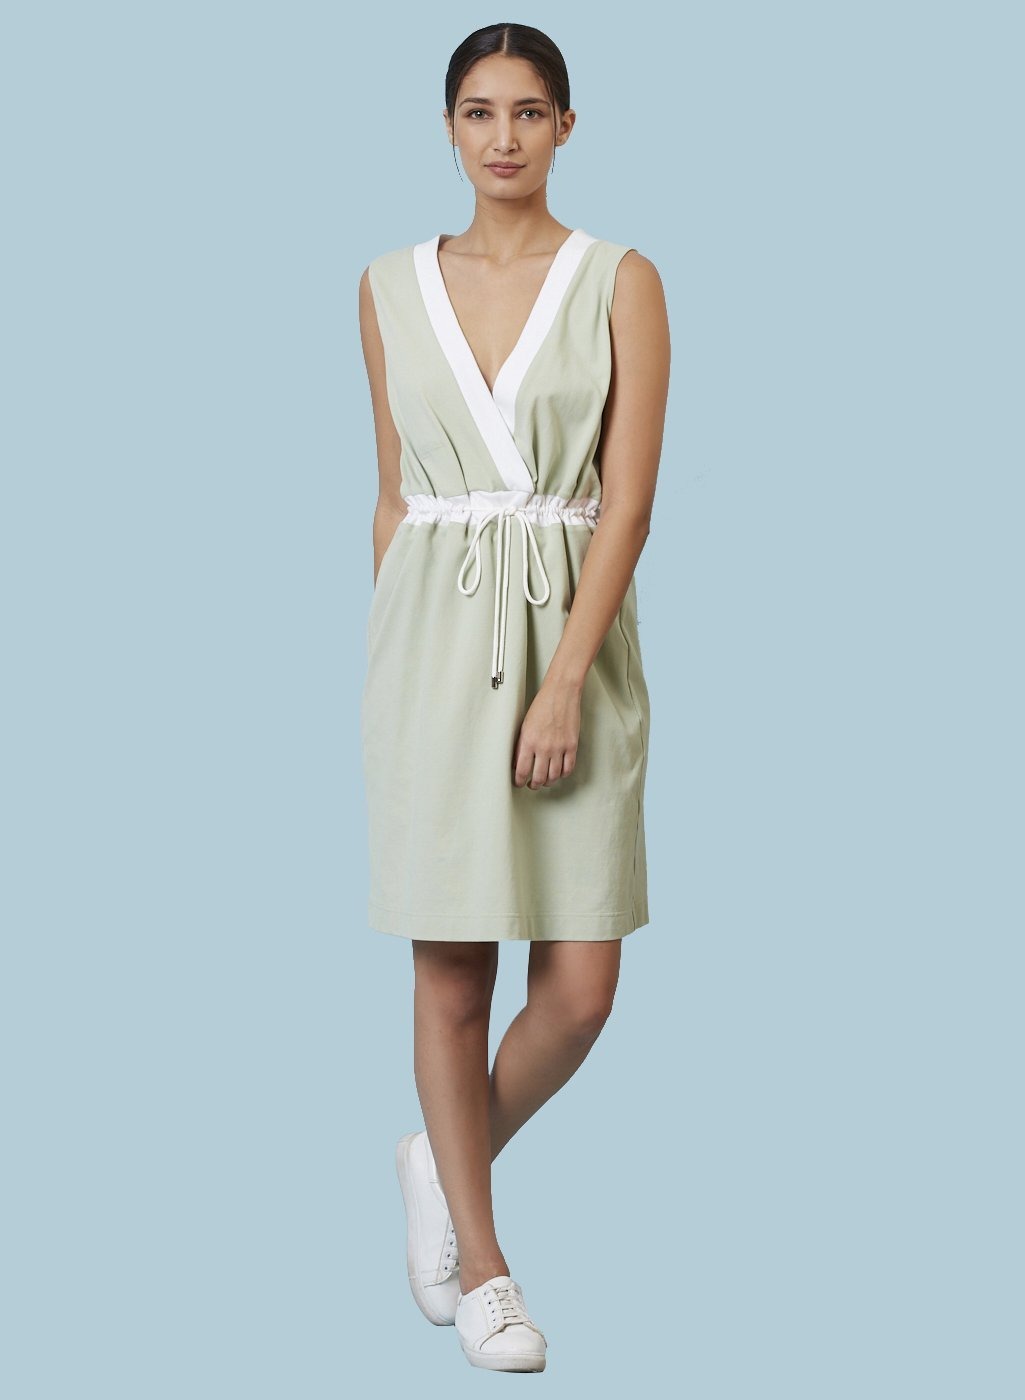 Ivy  Dress - Genes online store 2020